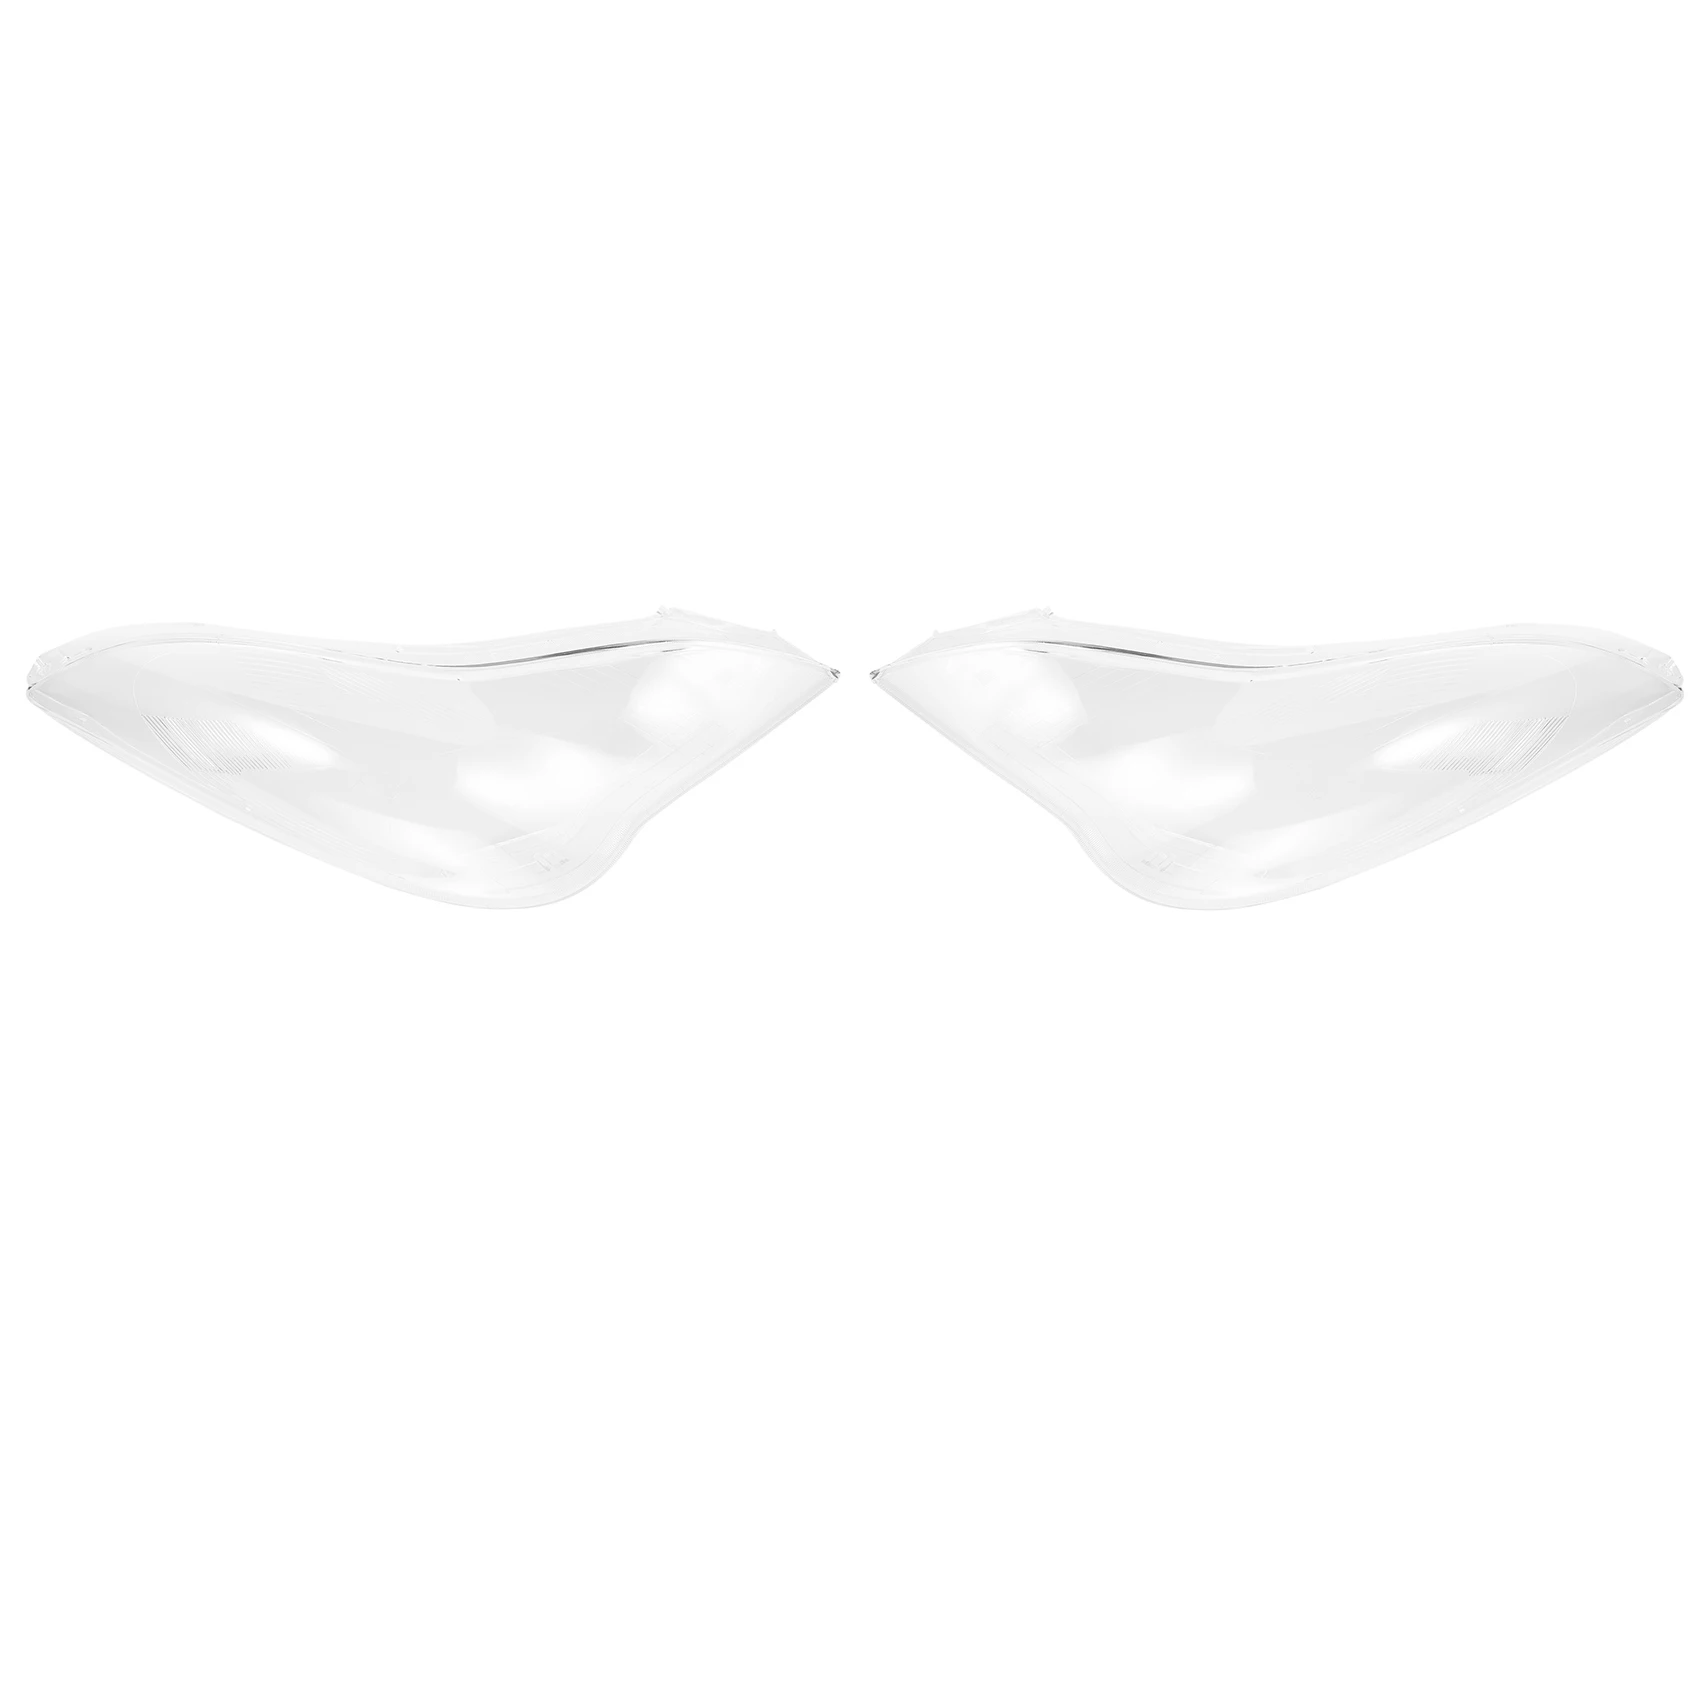 

Автомобильная накладка на переднюю фару, накладка на лампу, маска, абажур, стеклянная накладка на переднюю фару для Infiniti QX50 EX25 EX35 2008-2015